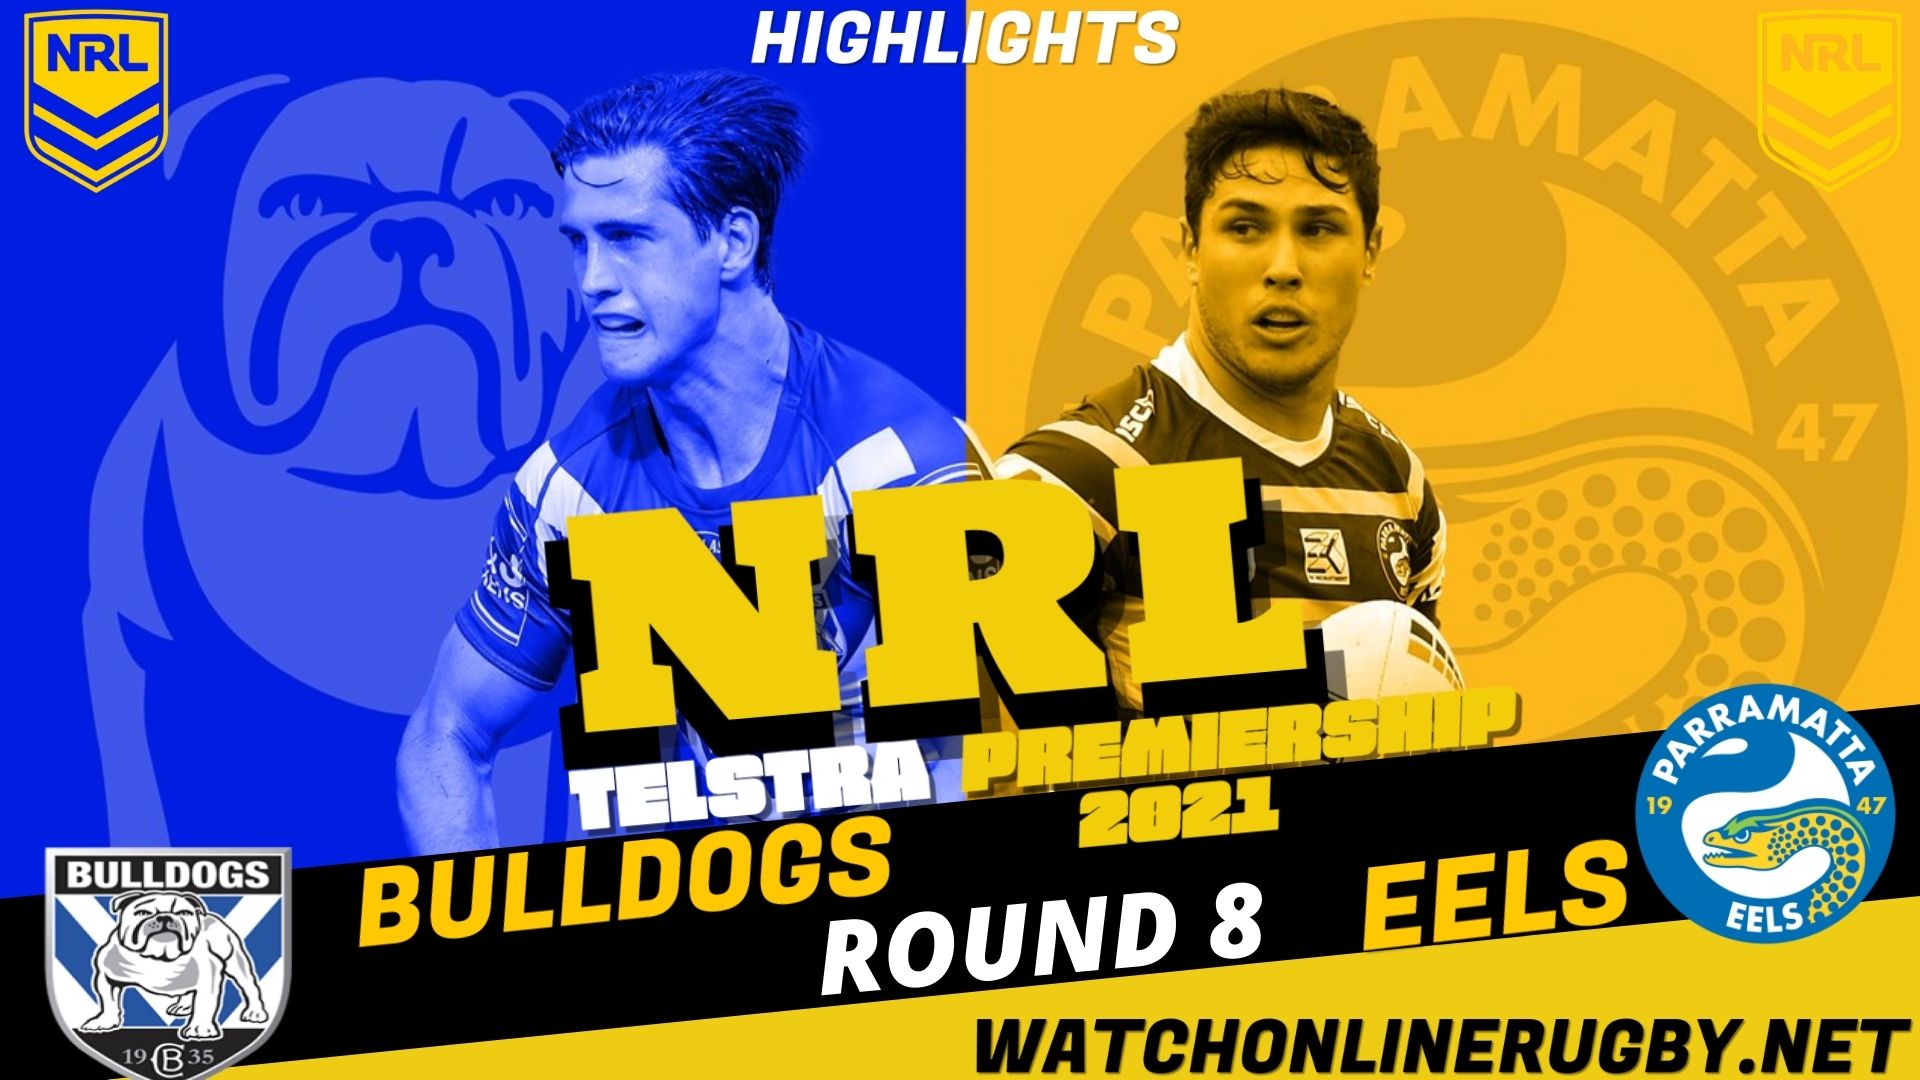 Bulldogs Vs Eels Highlights RD 8 NRL Rugby